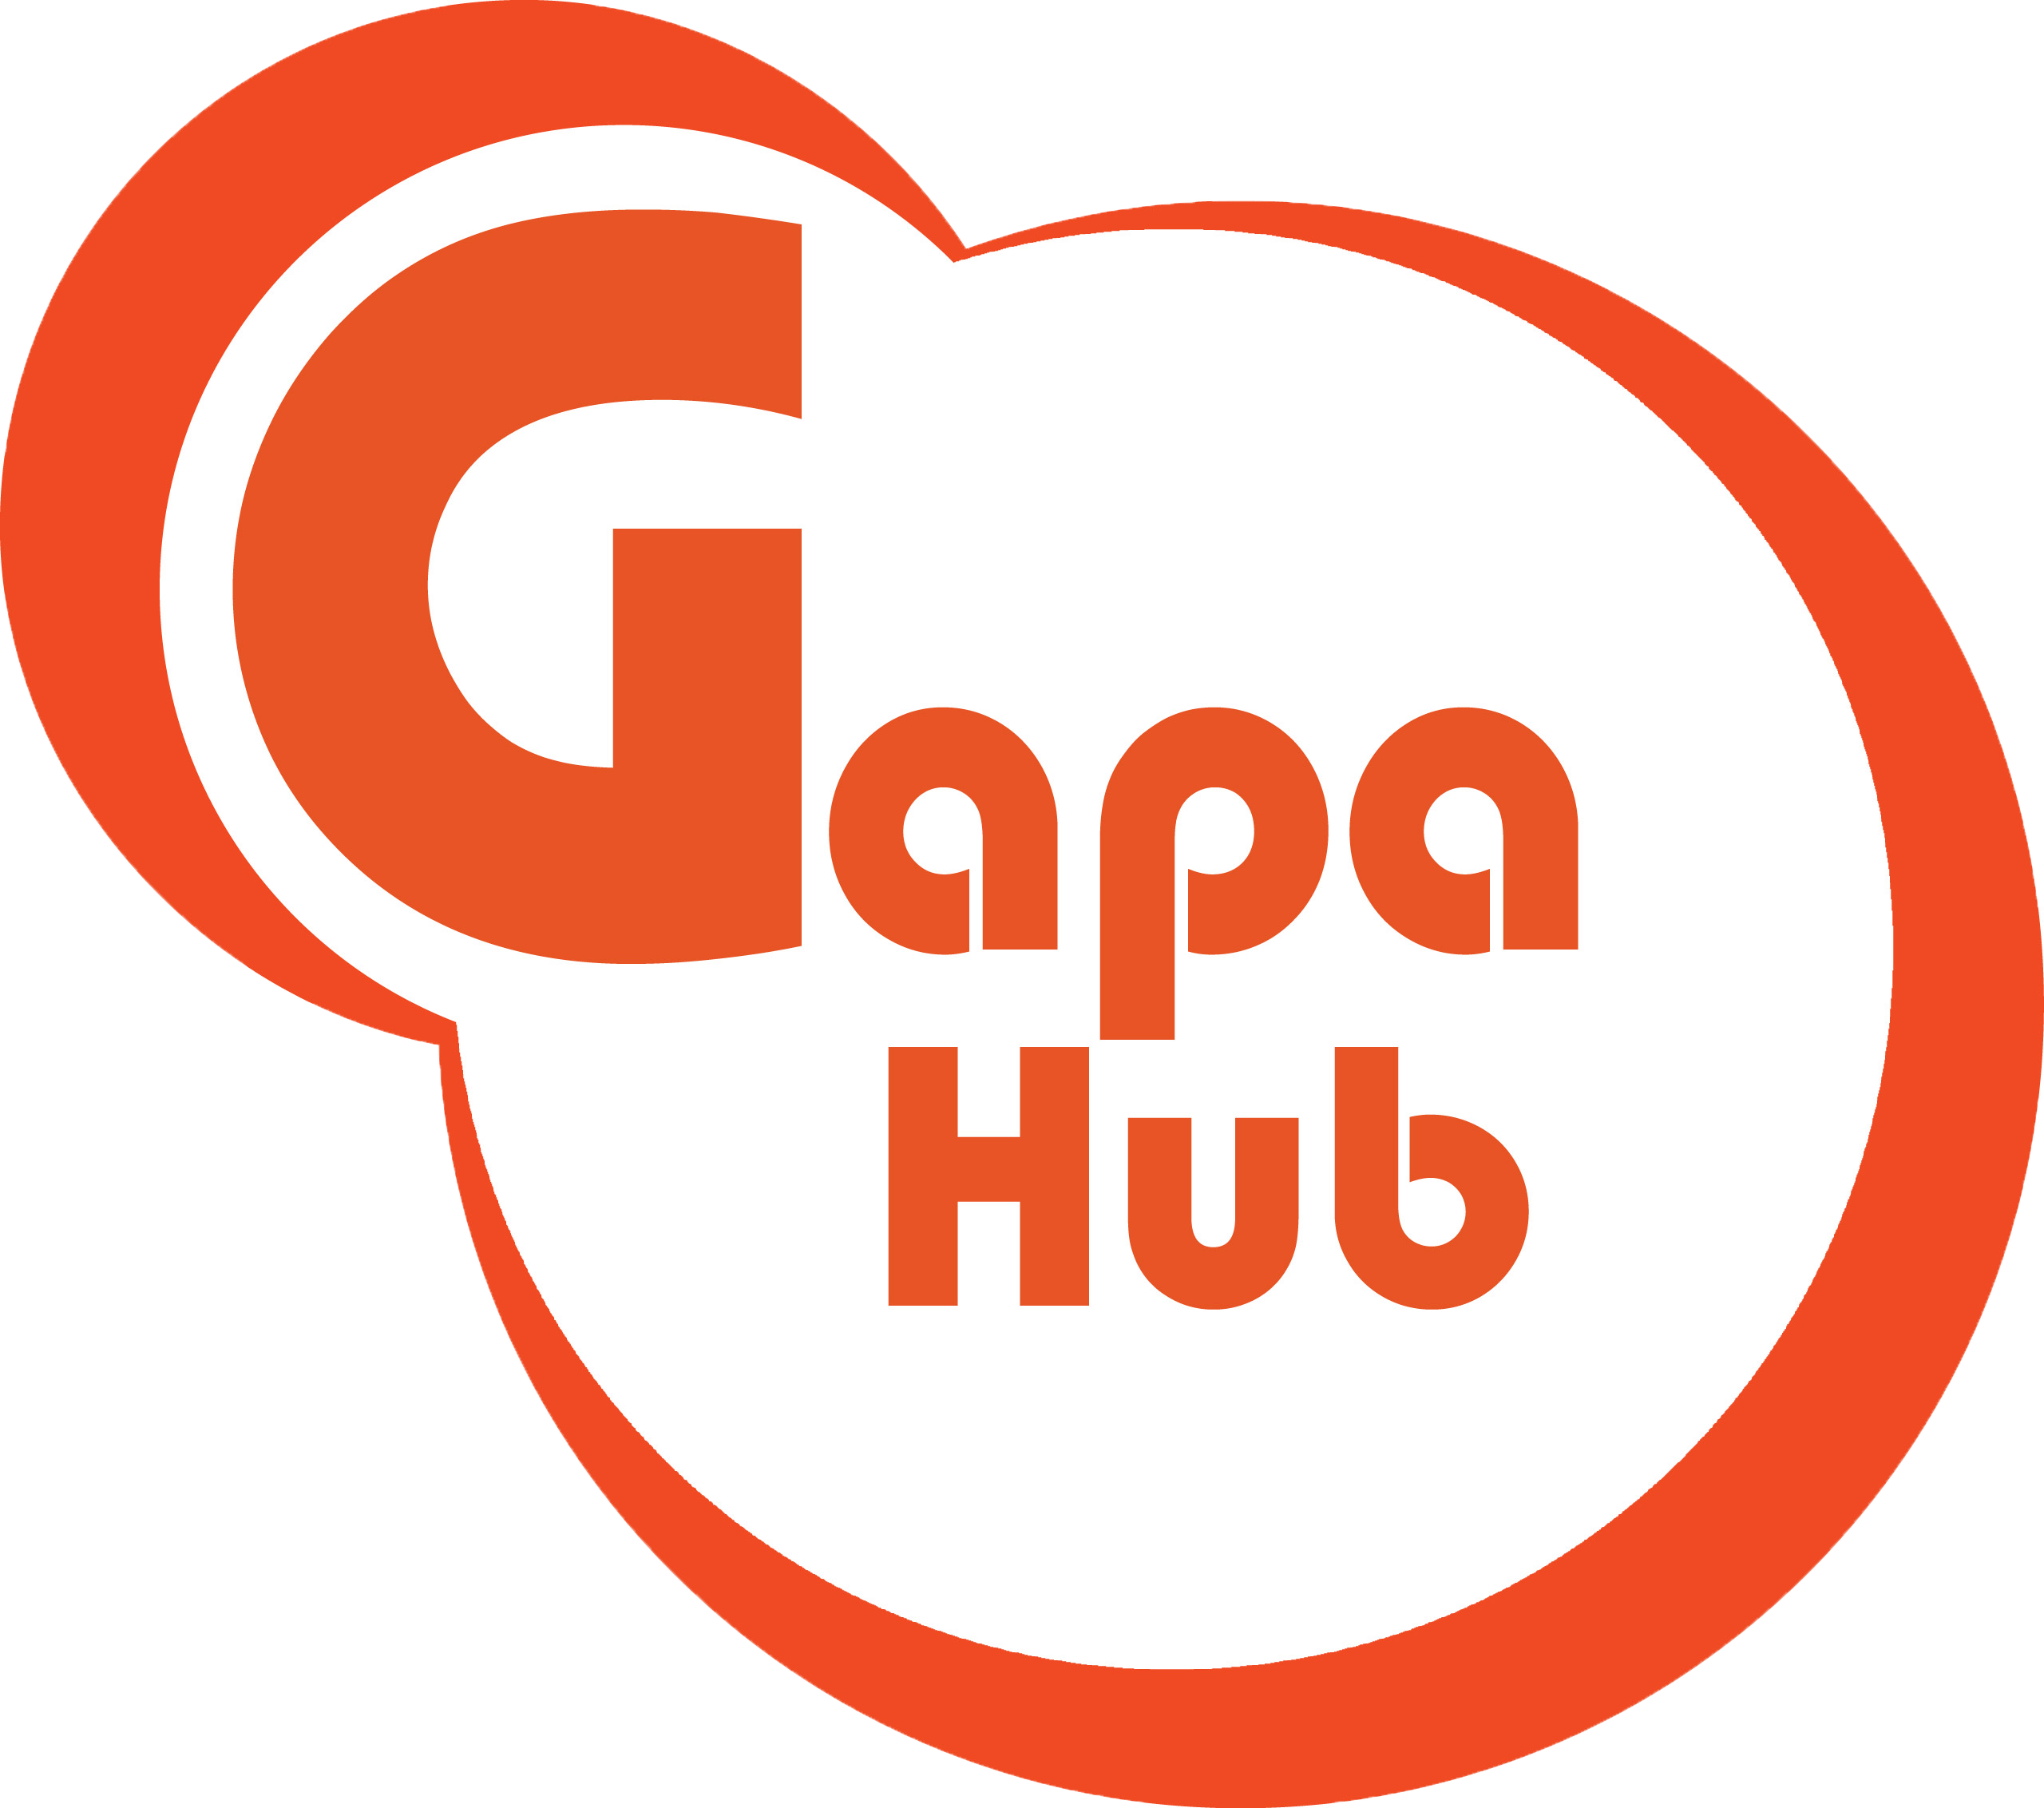 UltraHub Foreign Clients GAPA HUB Solutions Nigeria